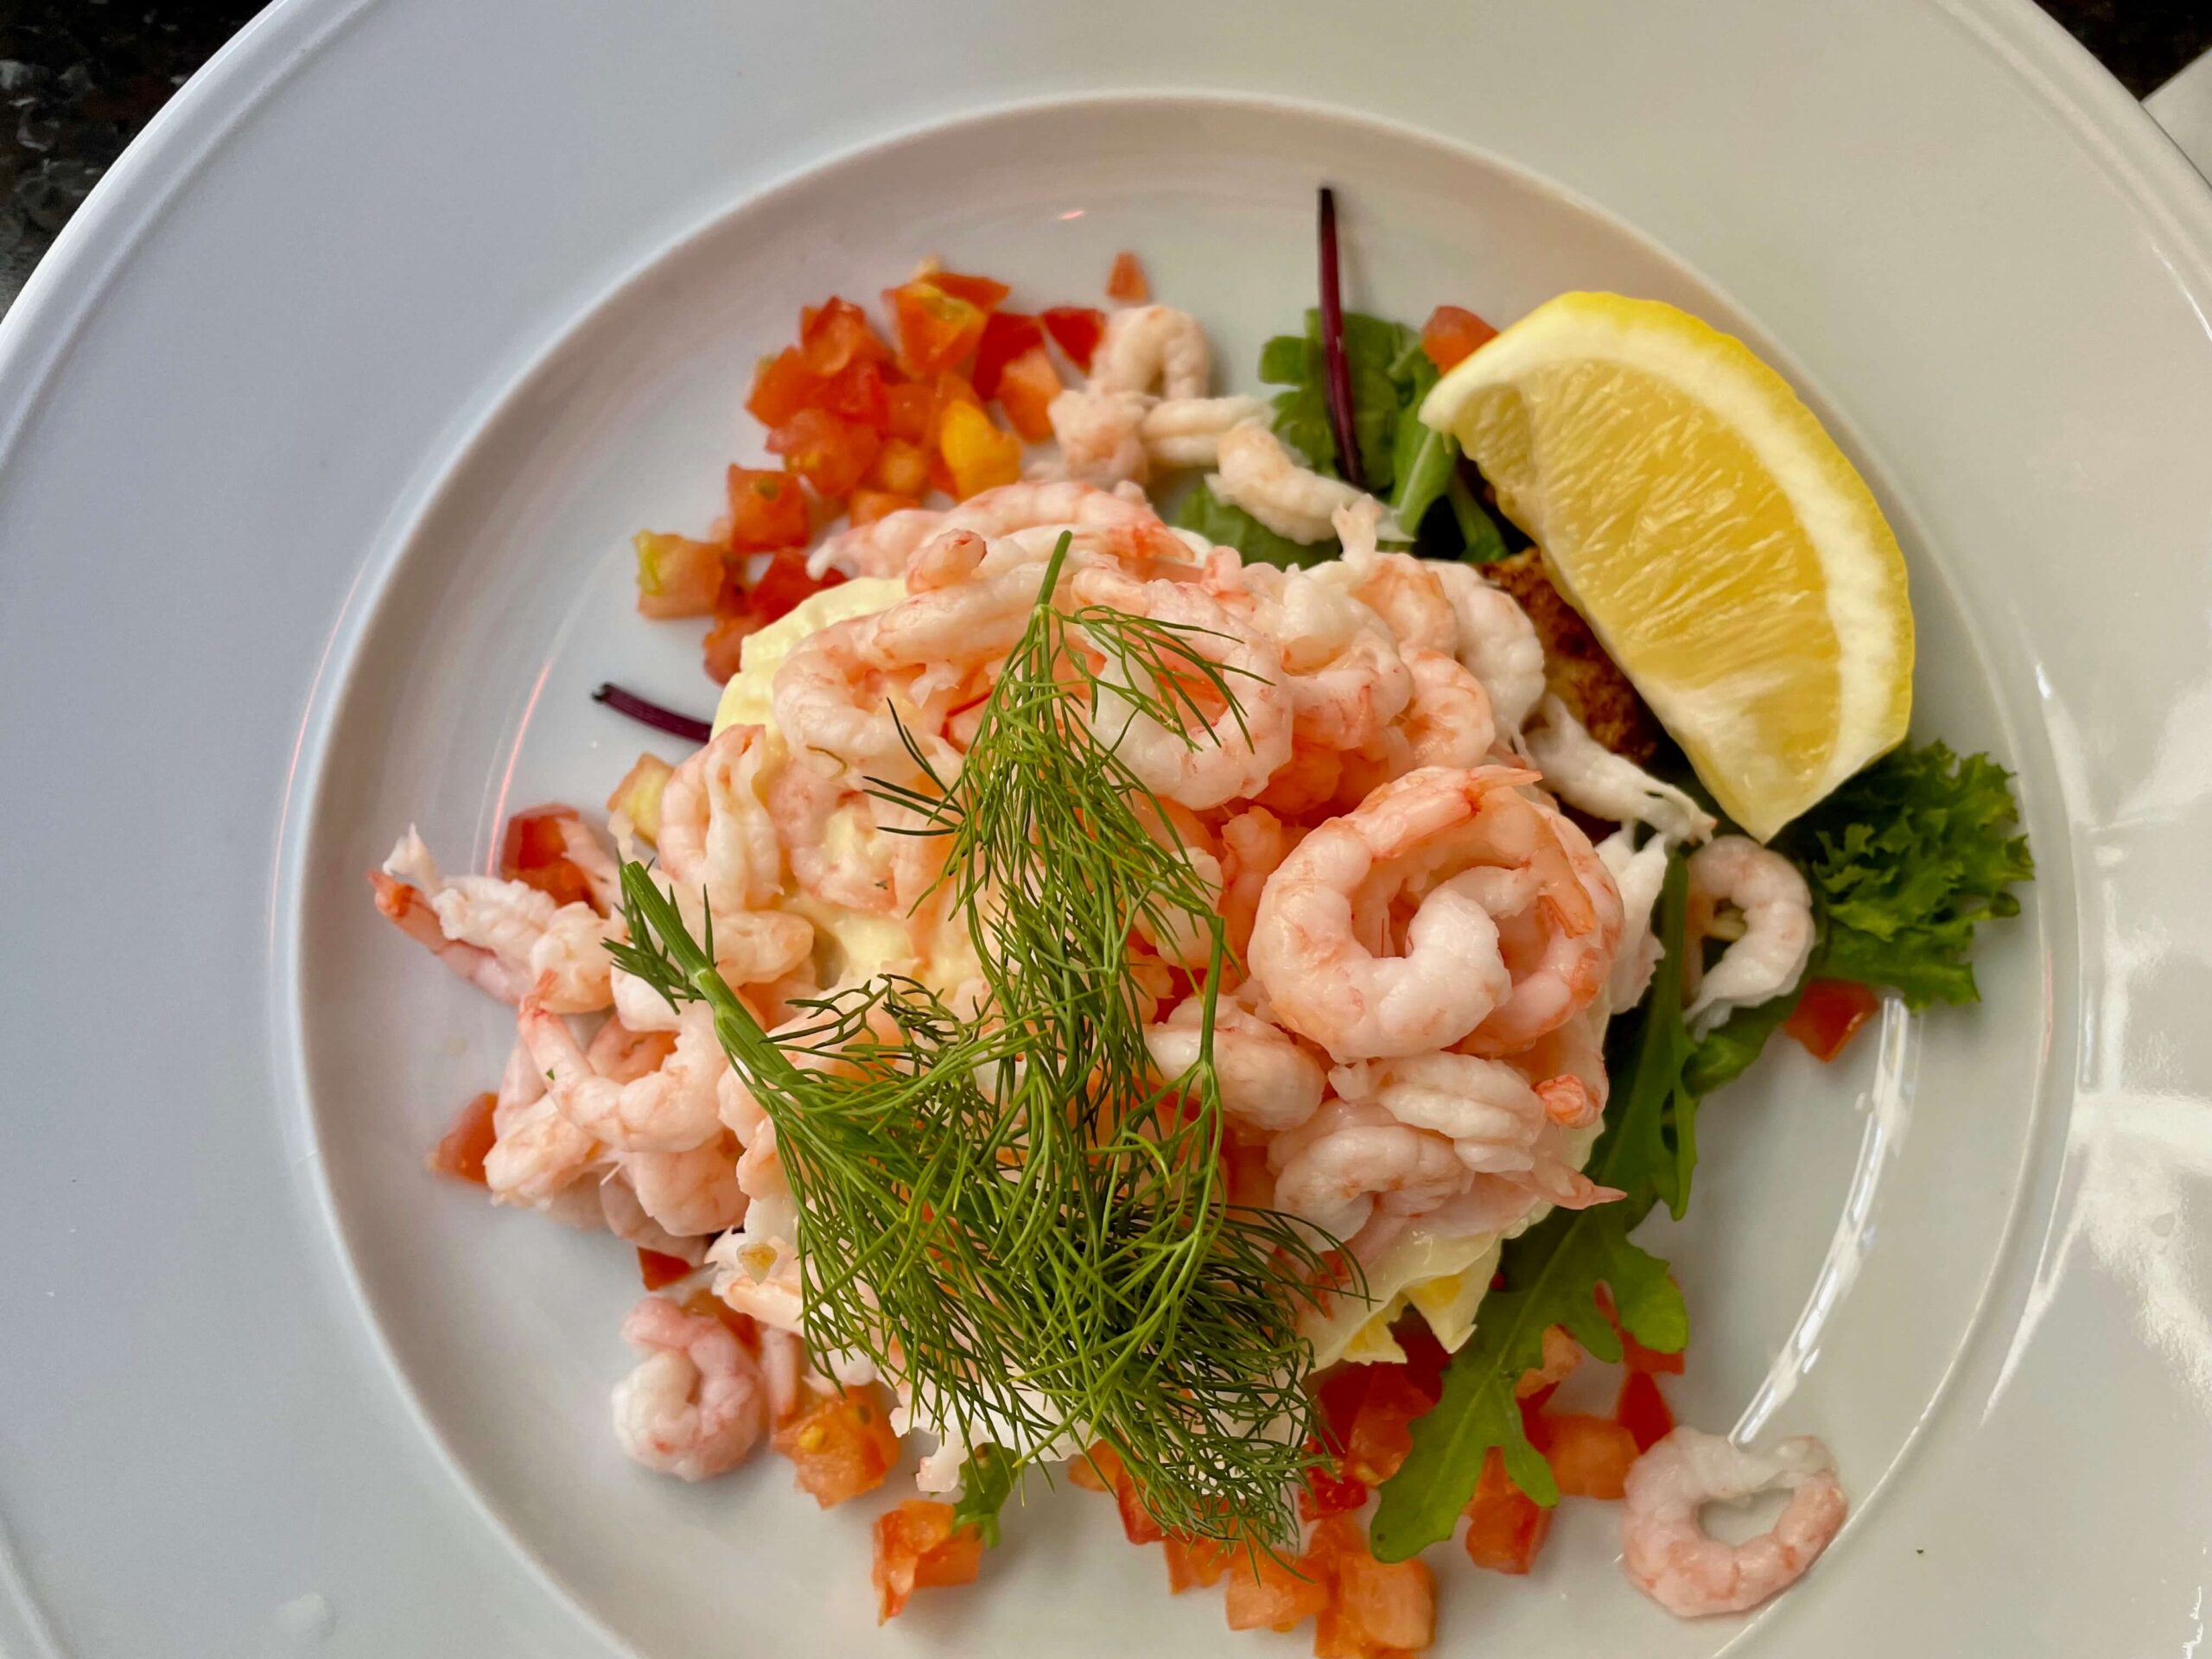 Sweden, Stockholm - Swedish "räksmörgås", shrimp sandwich